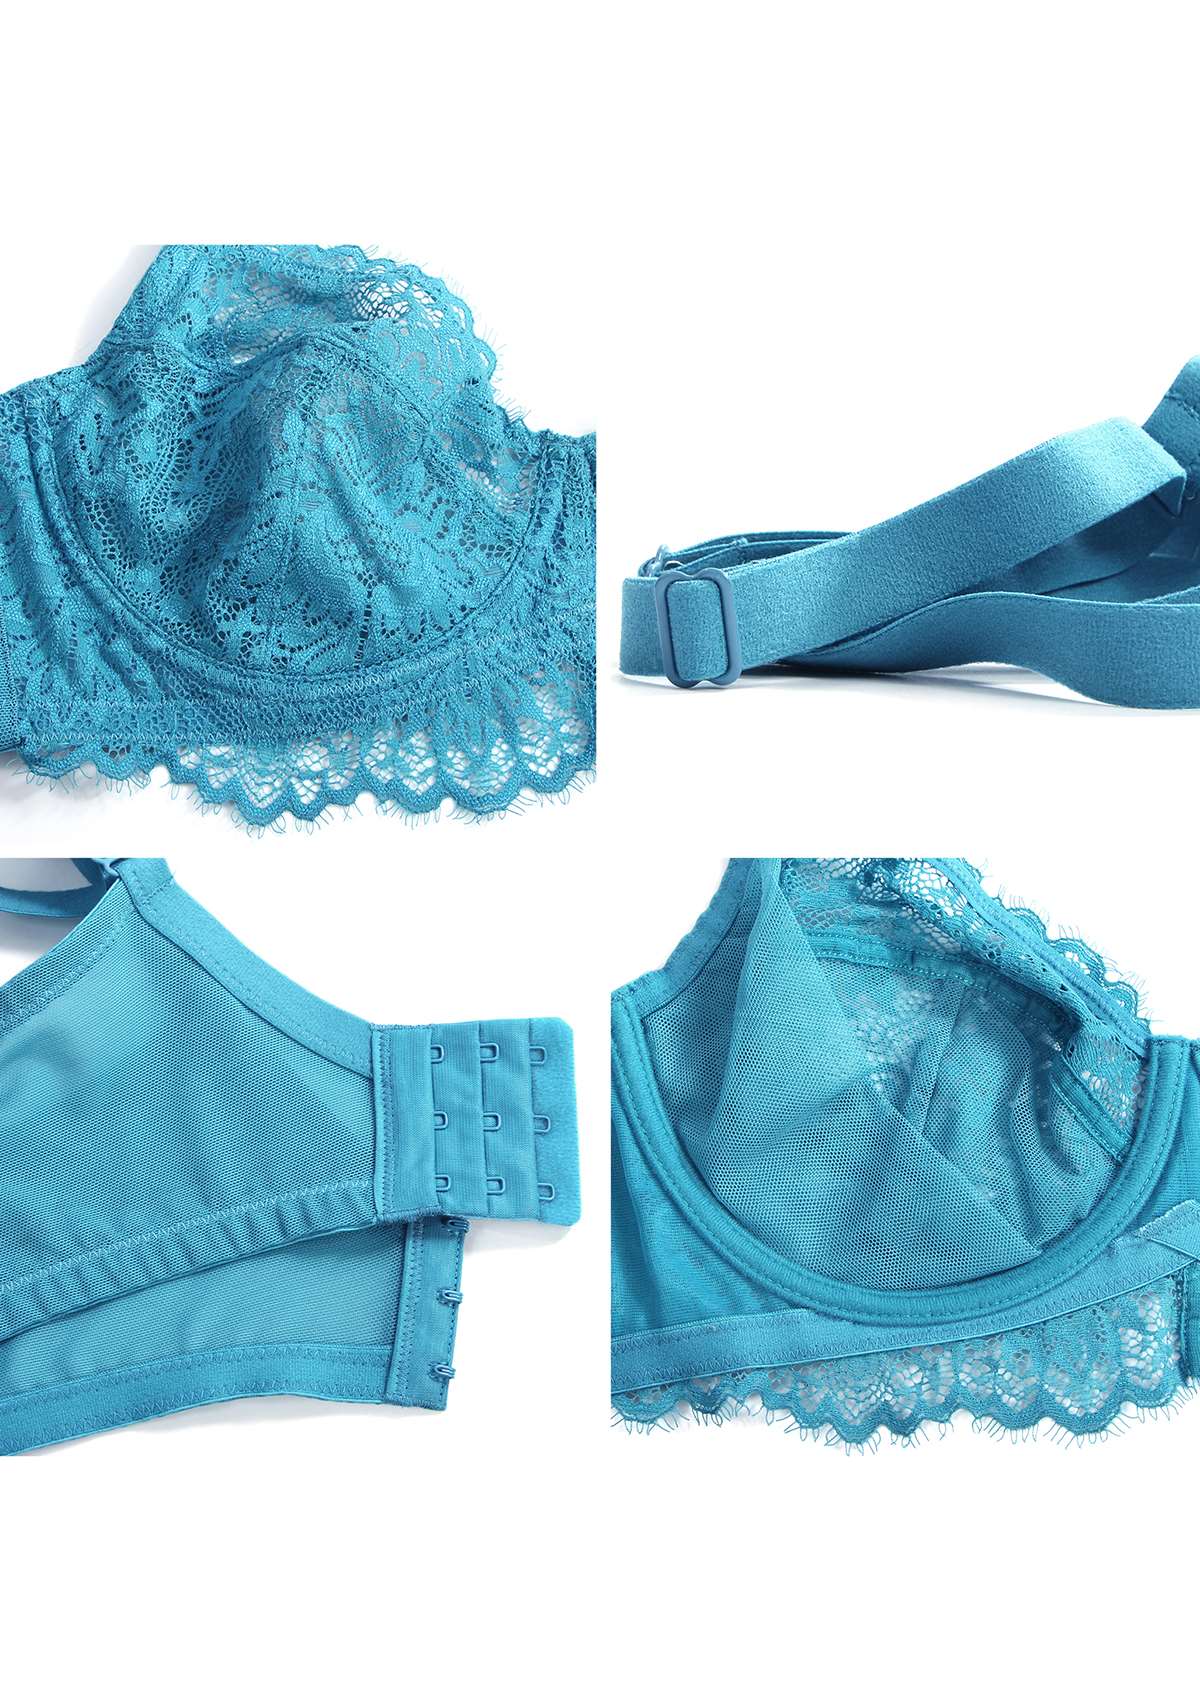 HSIA Sunflower Lace Bra And Panty: Cute Plus Size Comfort Bra - Horizon Blue / 42 / H